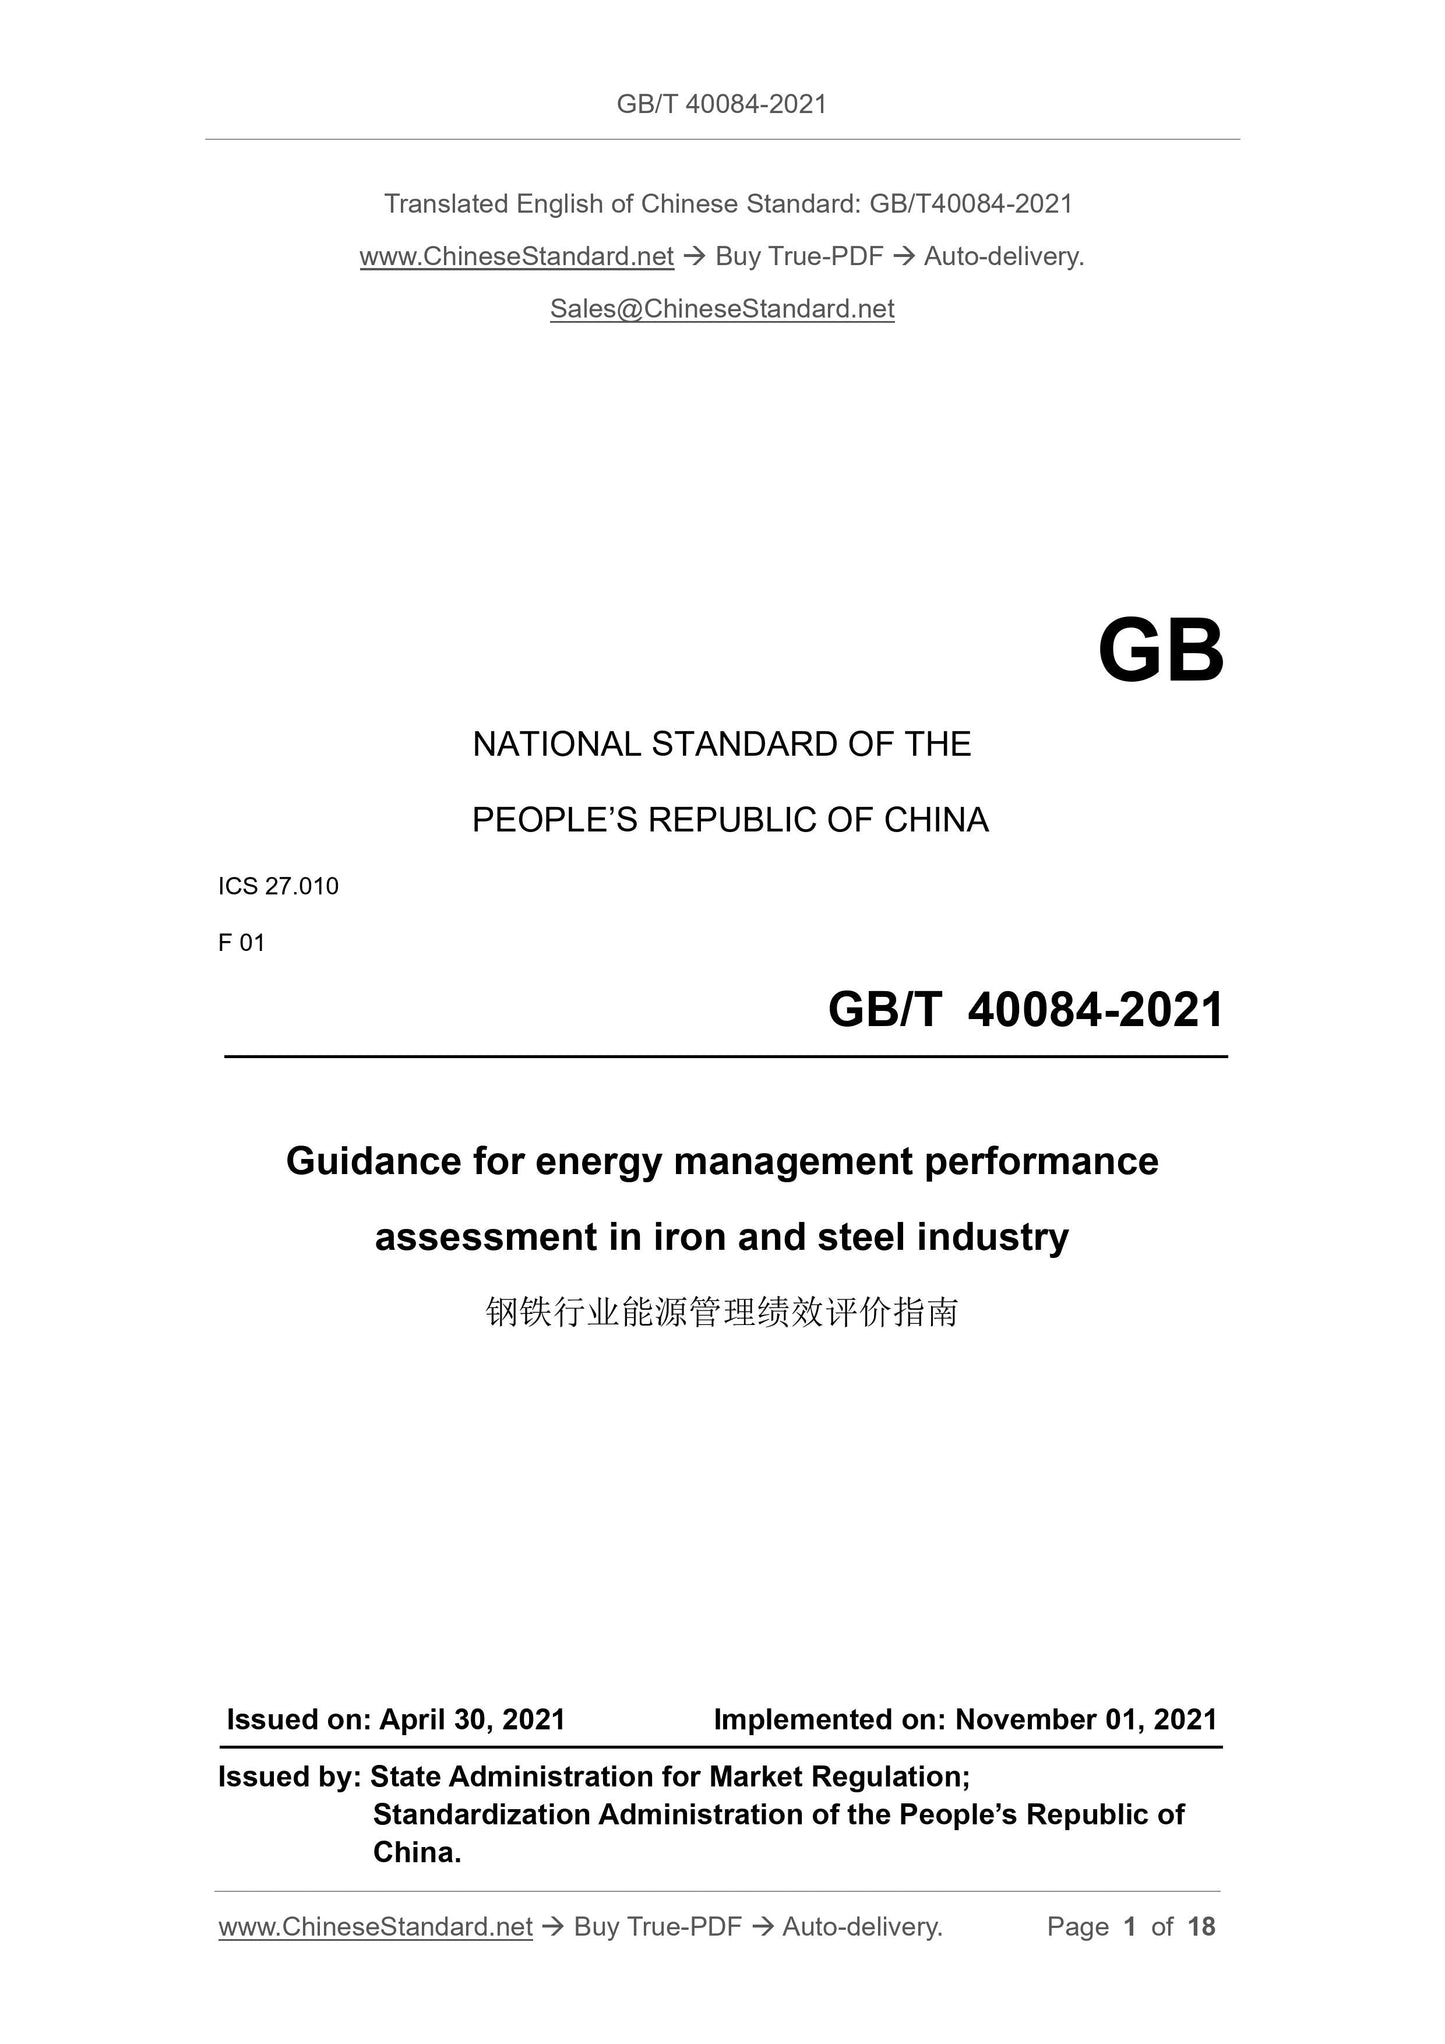 GBT40084-2021 Page 1